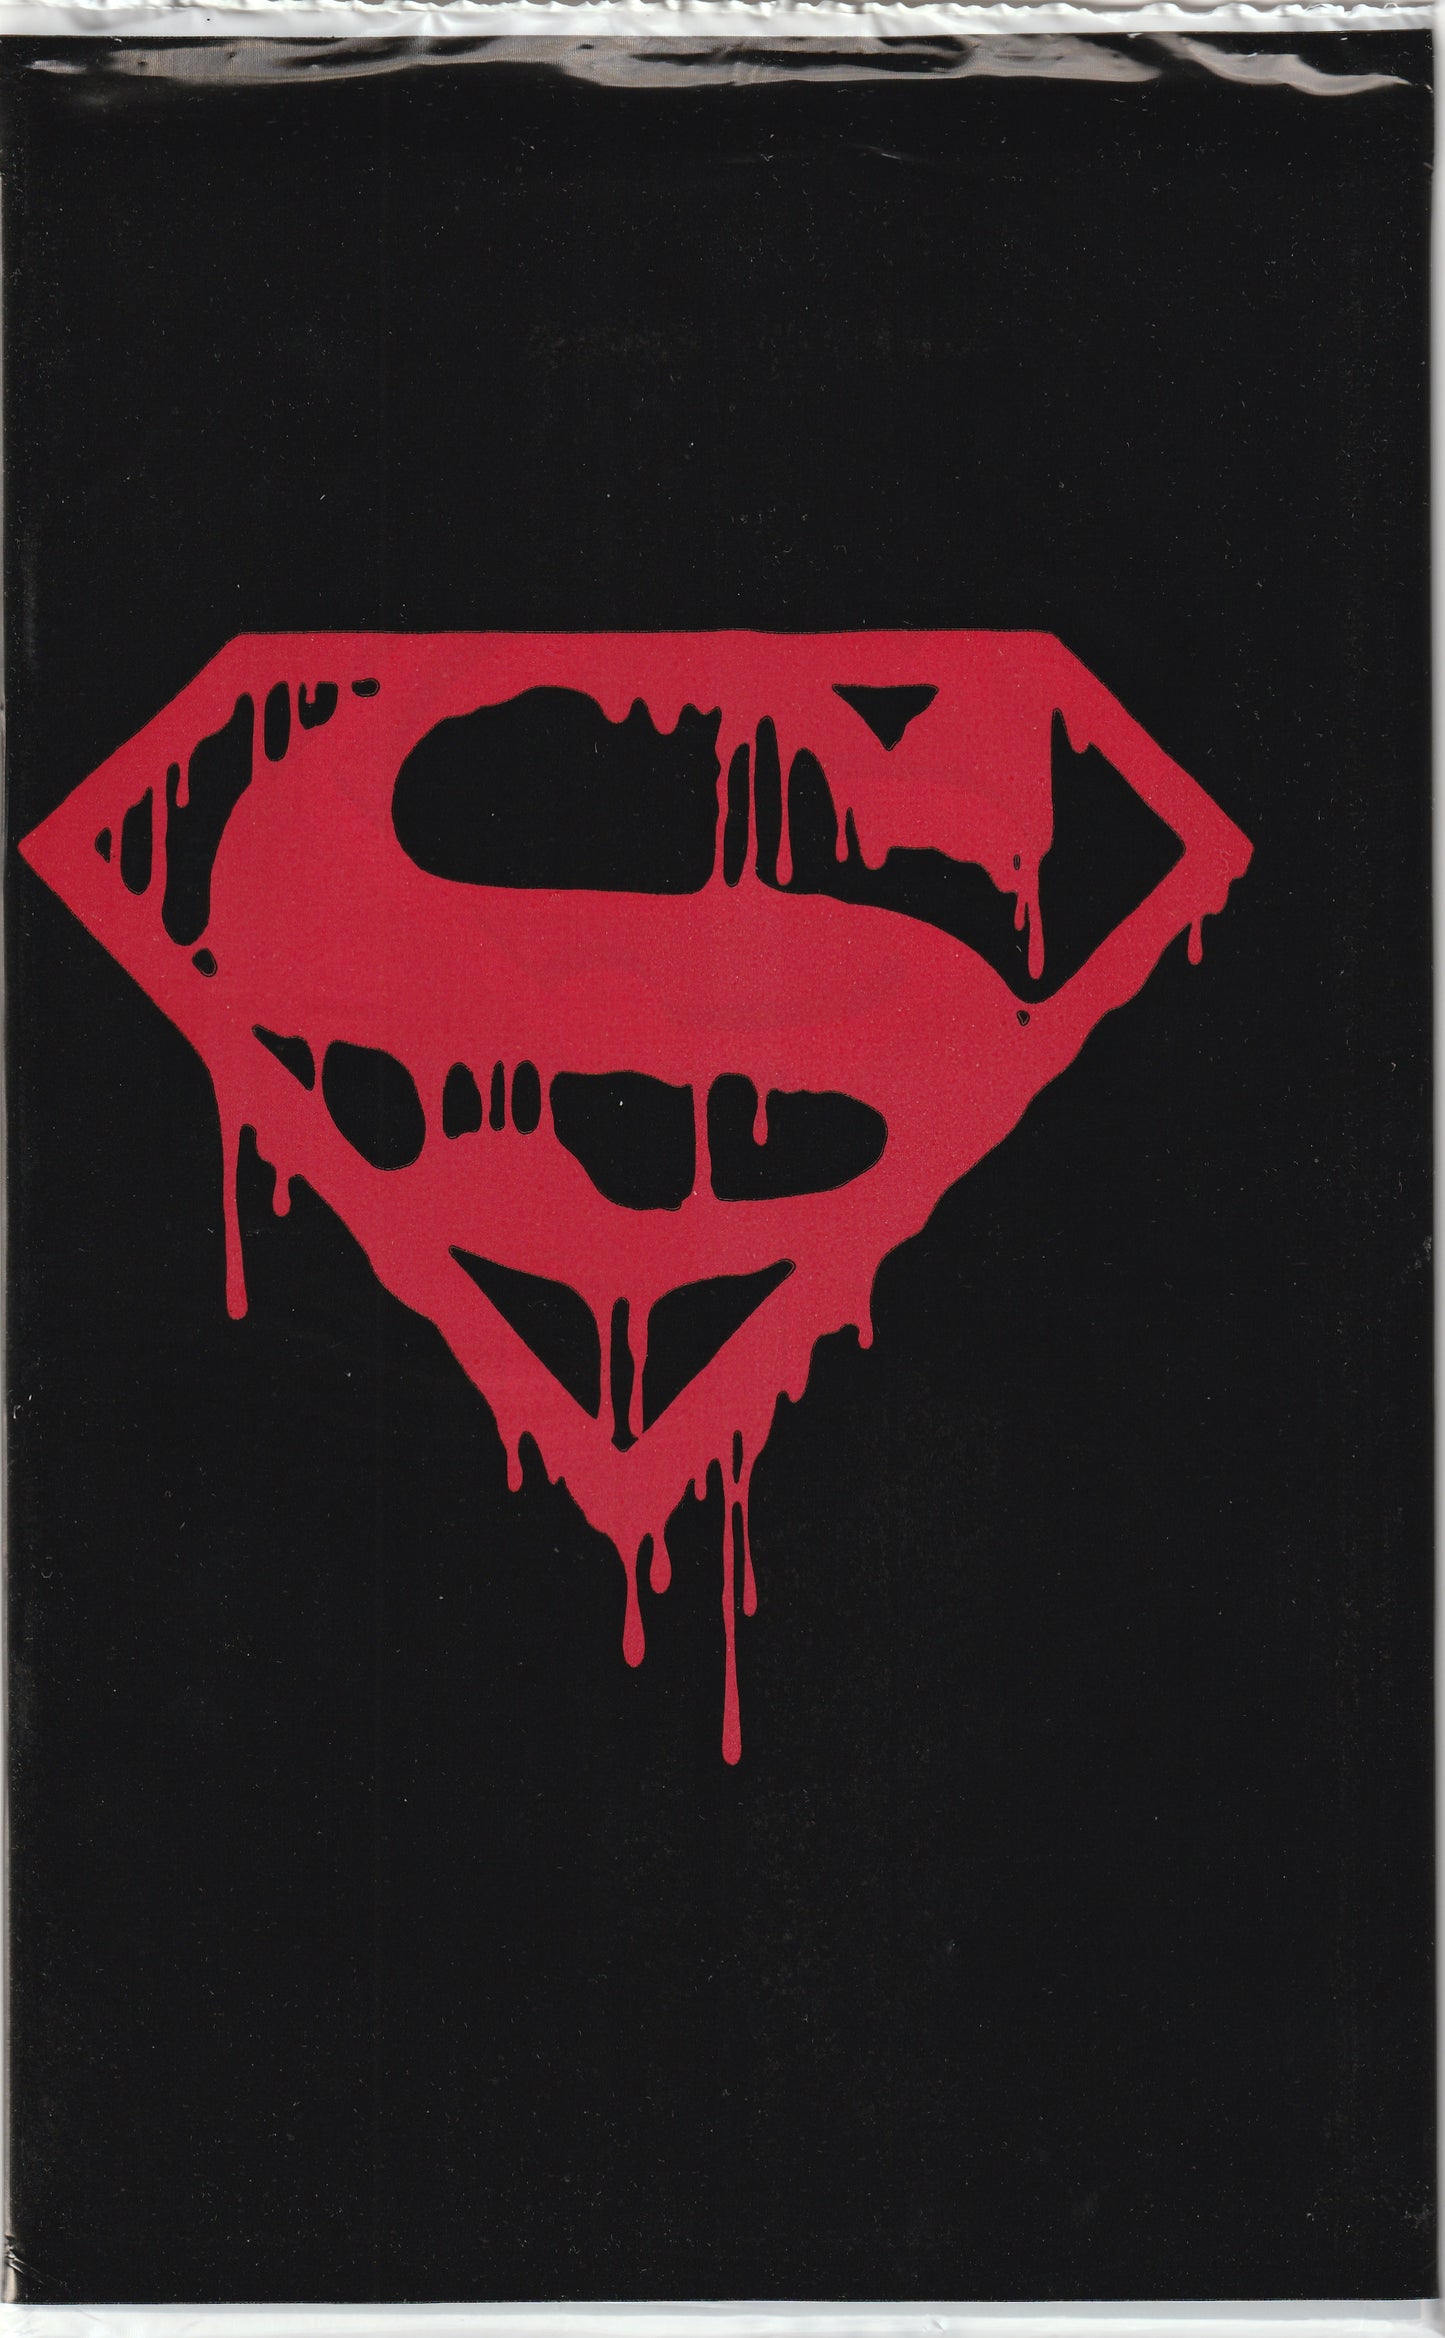 Superman #75 (Vol 2, 1993) - Death of Superman Black Bag Edition. Gravestone Cover inside.